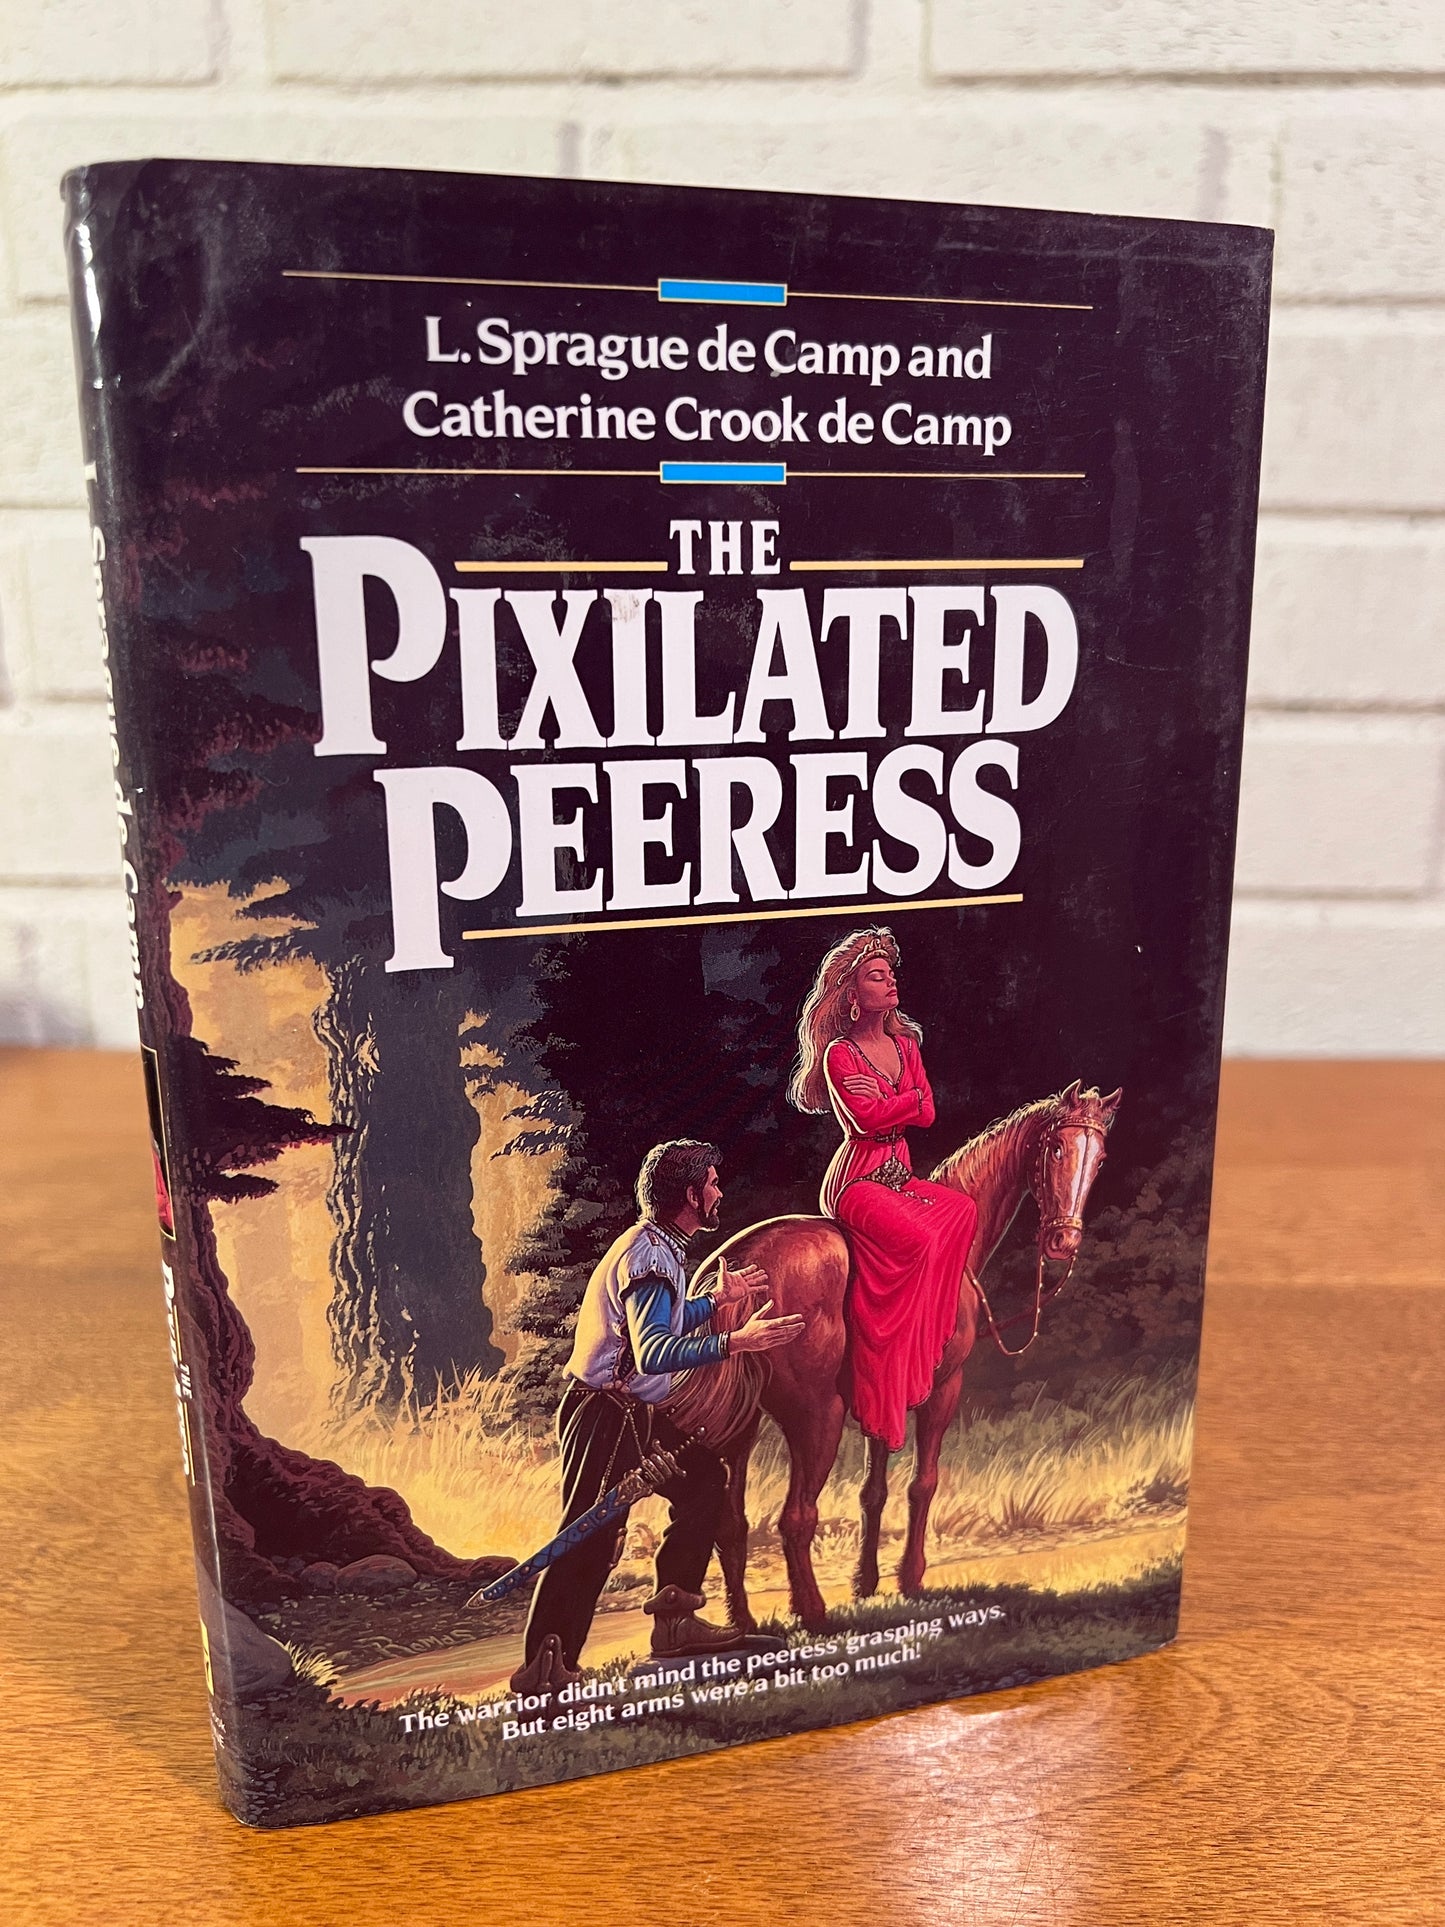 The Pixilated Peeress by L. Sprague de Camp and Catherine Crook de Camp